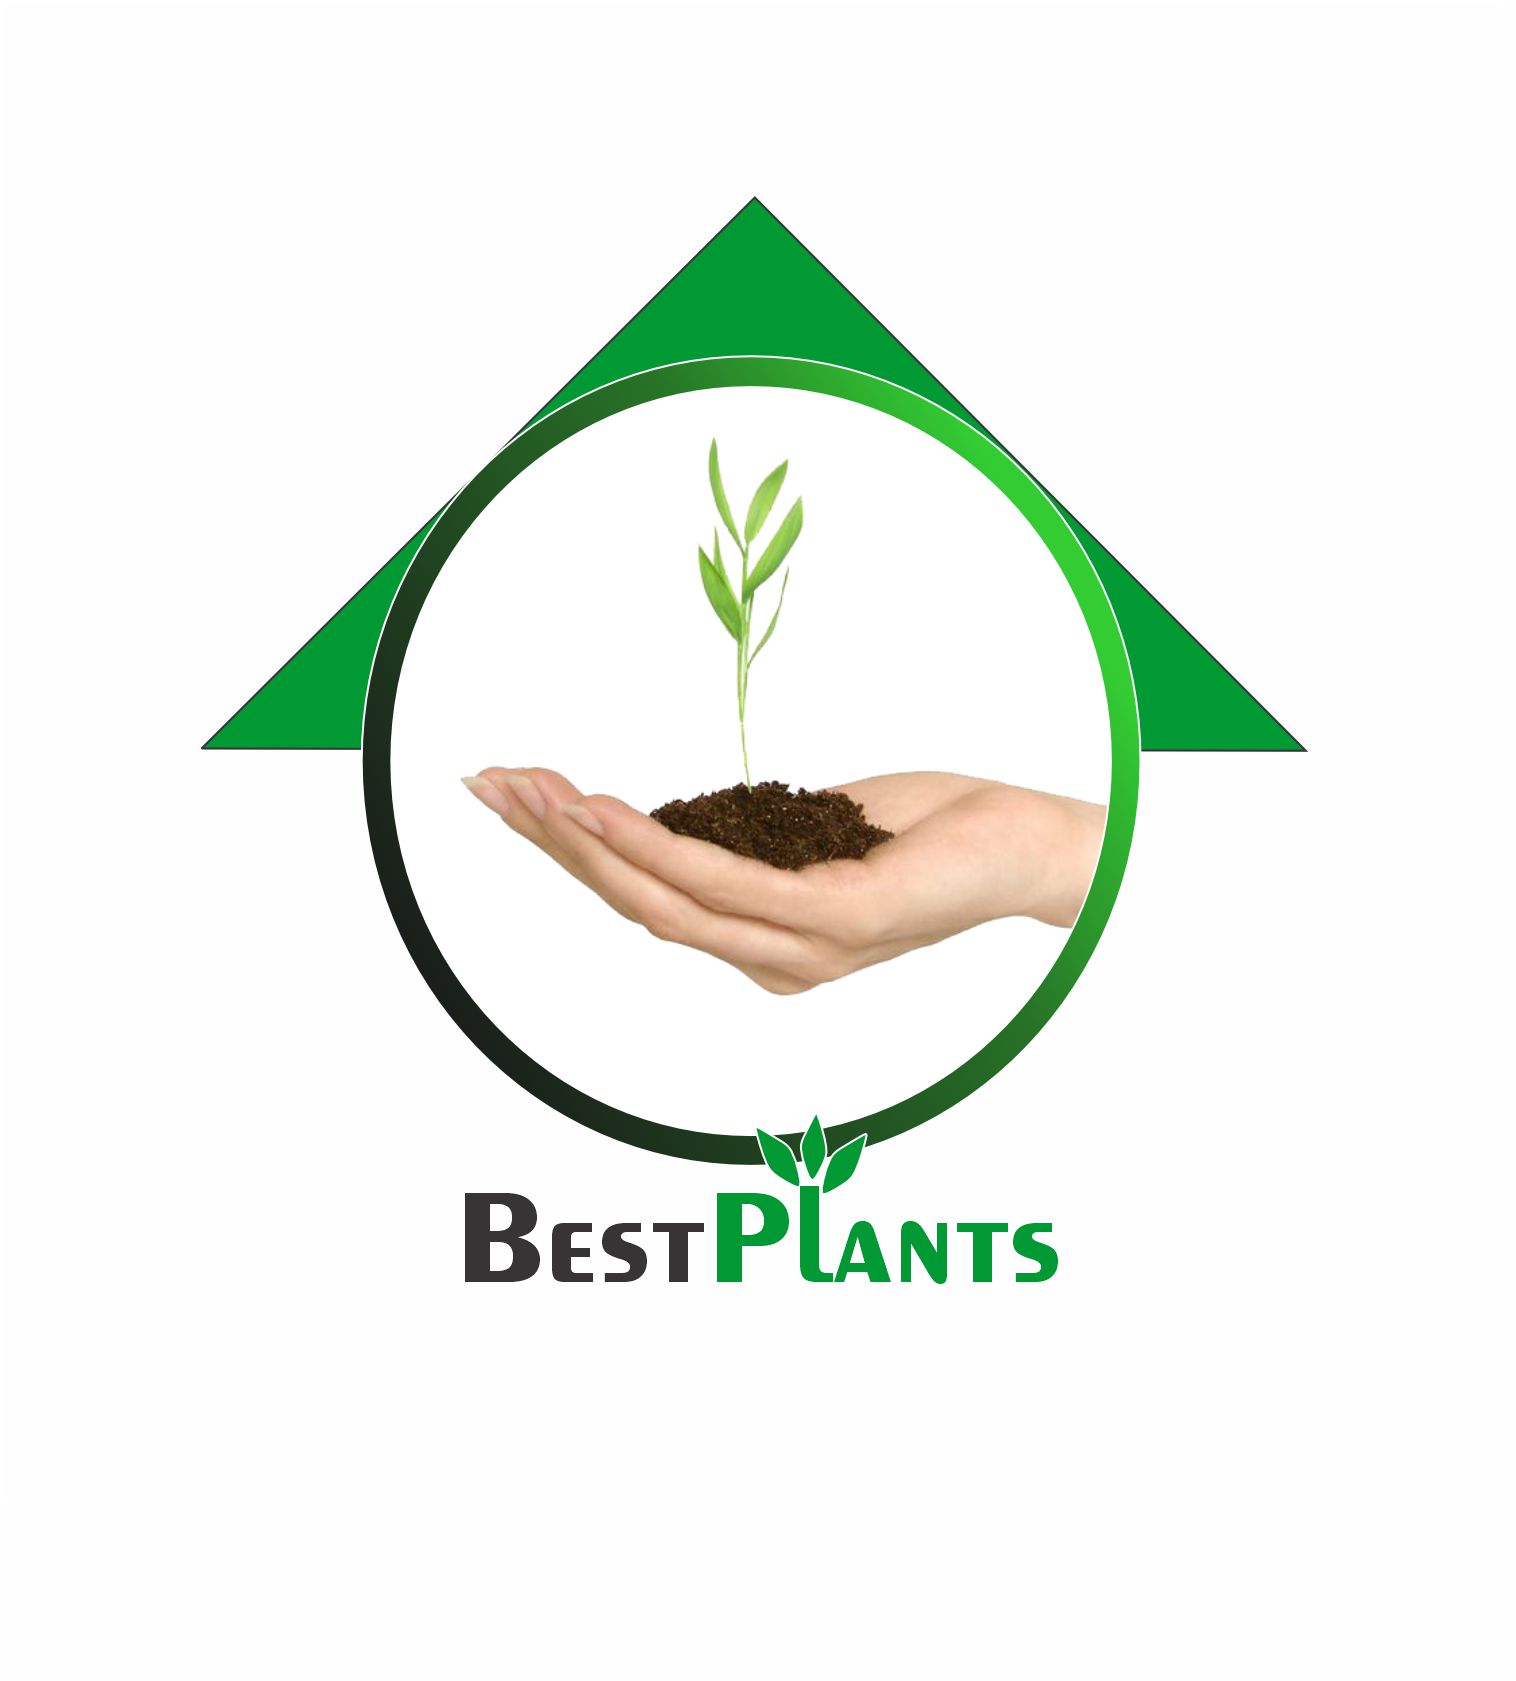 BEST PLANTS